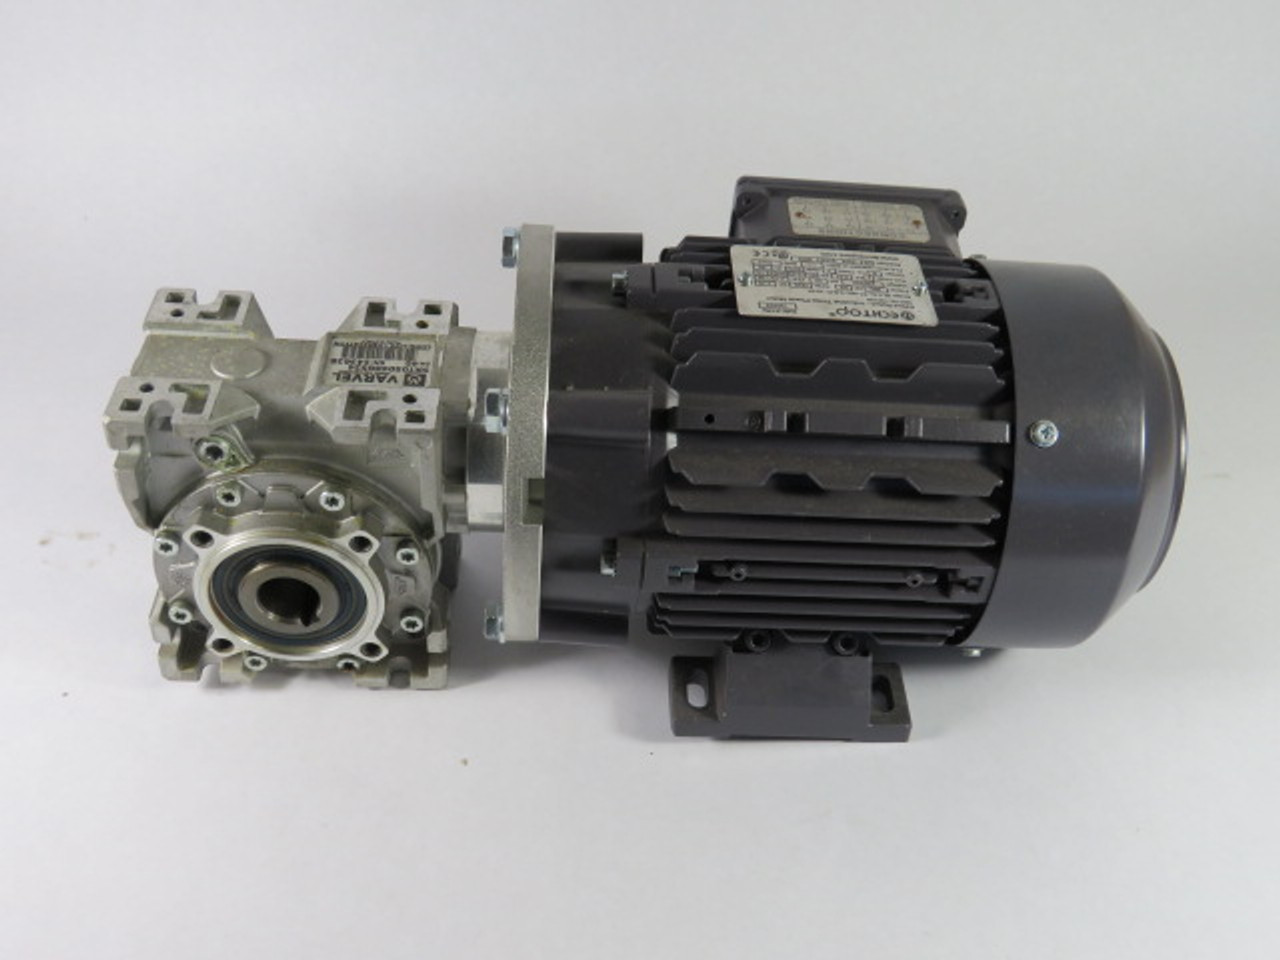 Techtop Motor 3/4HP 1725RPM 230/460V 56C TEFC 3Ph C/W Gearbox 40:1 Ratio ! NEW !